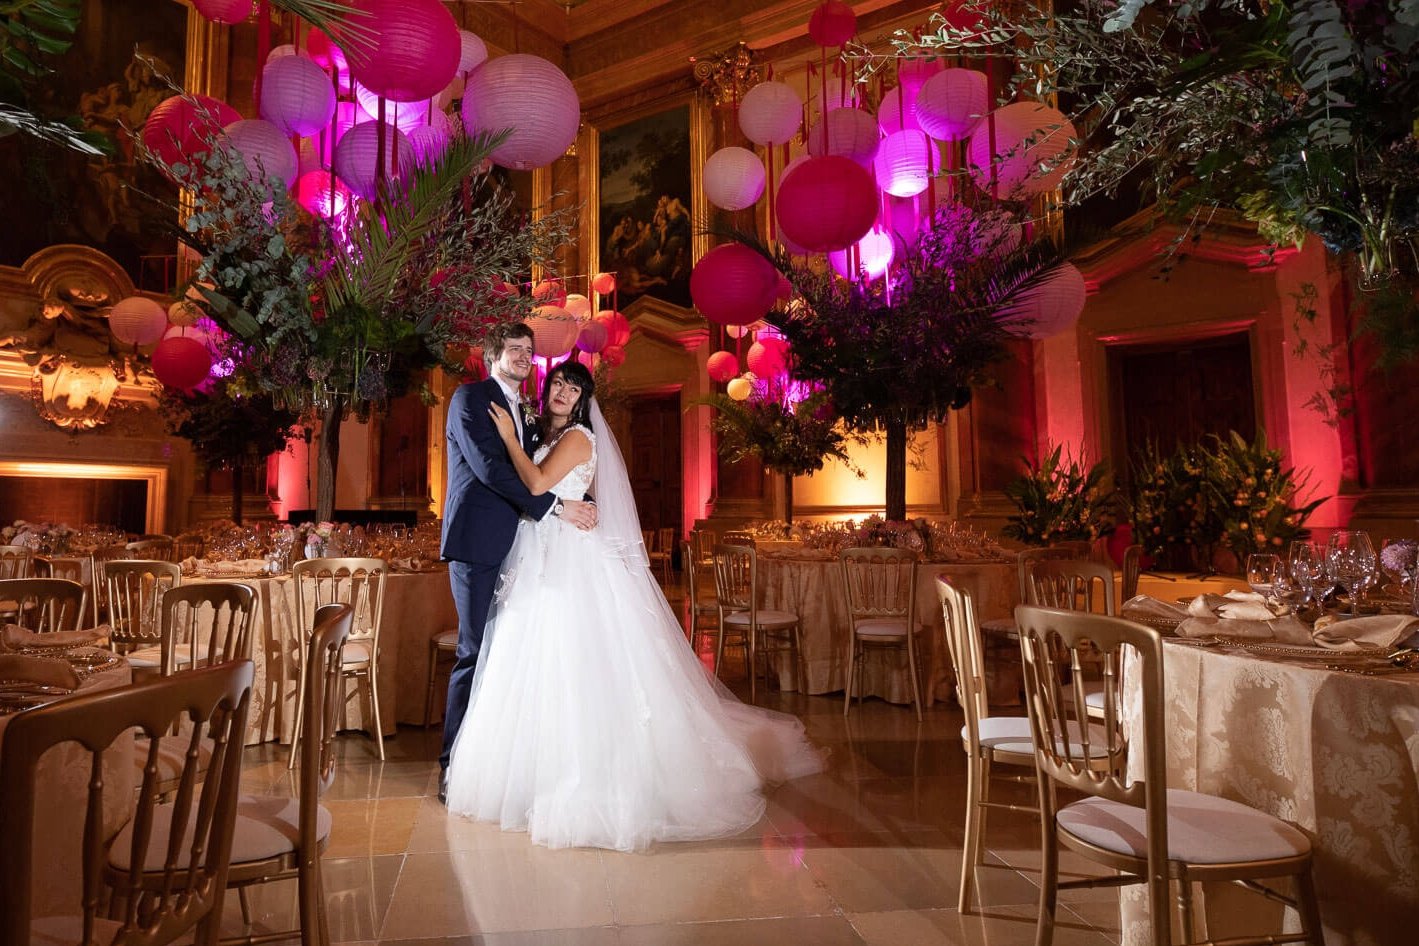 Wedding photographer Vienna at Palais Liechtenstein with bridal couple posing in the decorated ballroom
